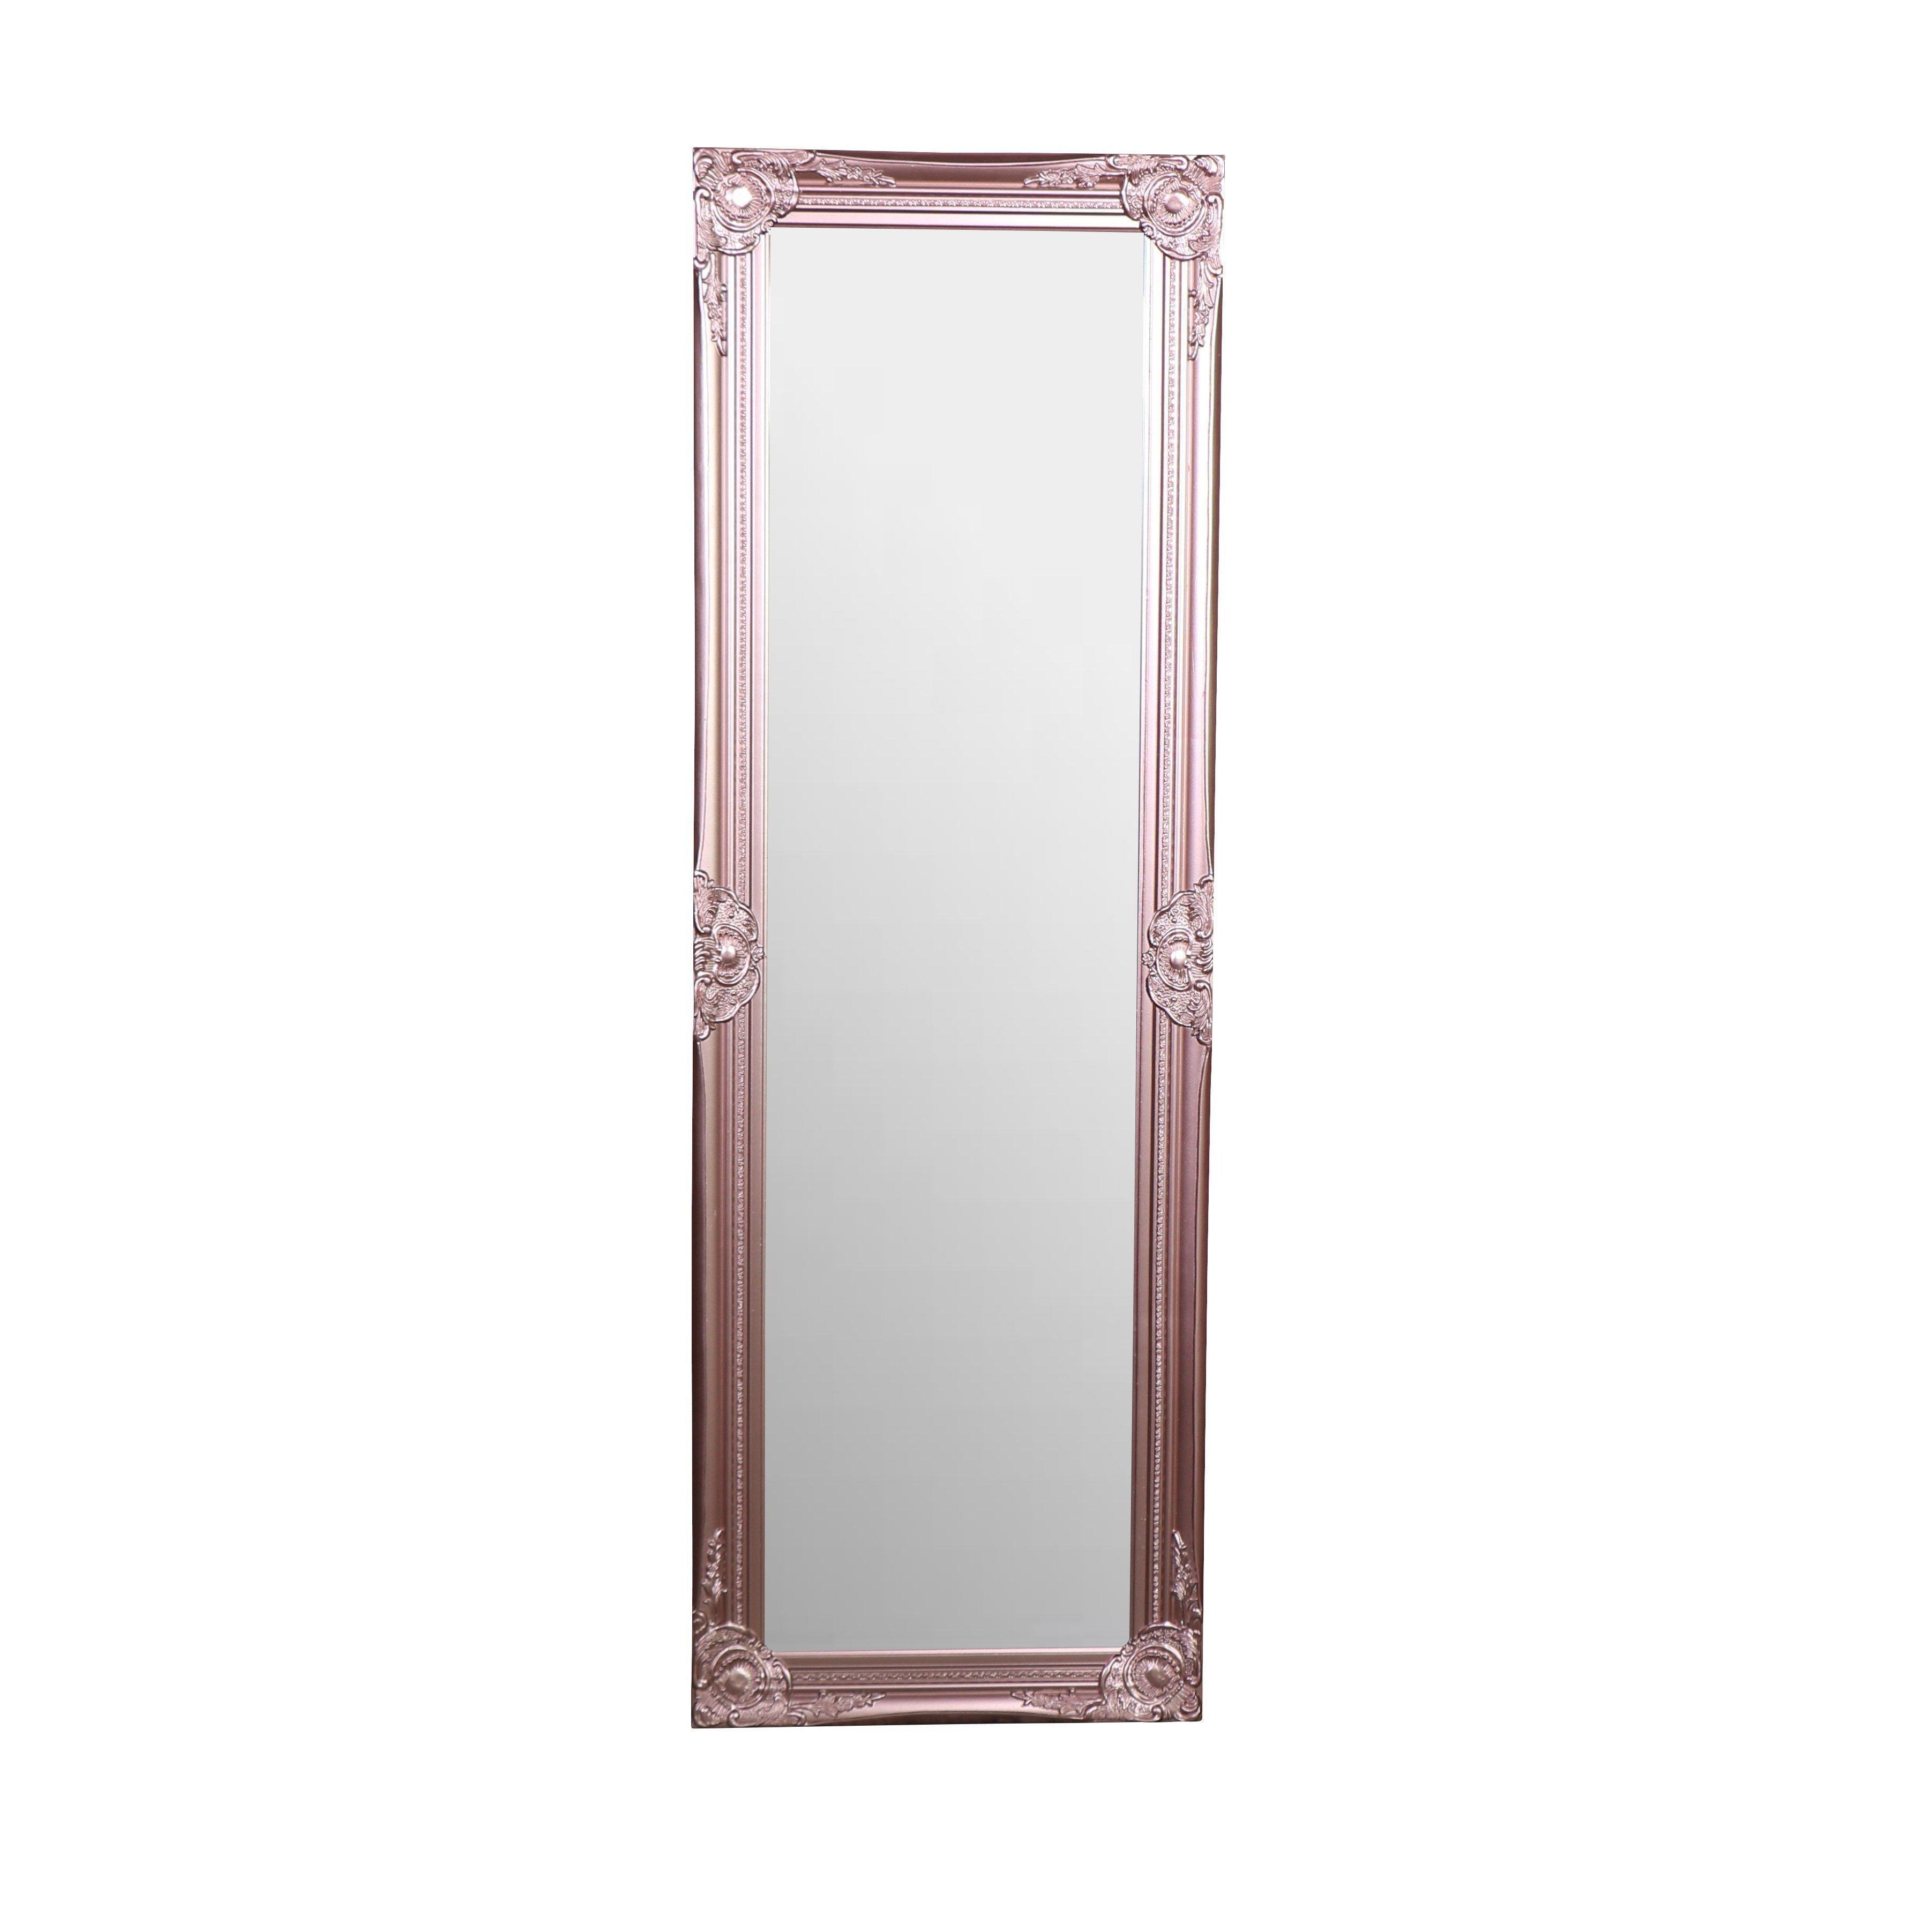 Tall Ornate Rose Gold Pink Mirror 47cm X 142cm - image 1